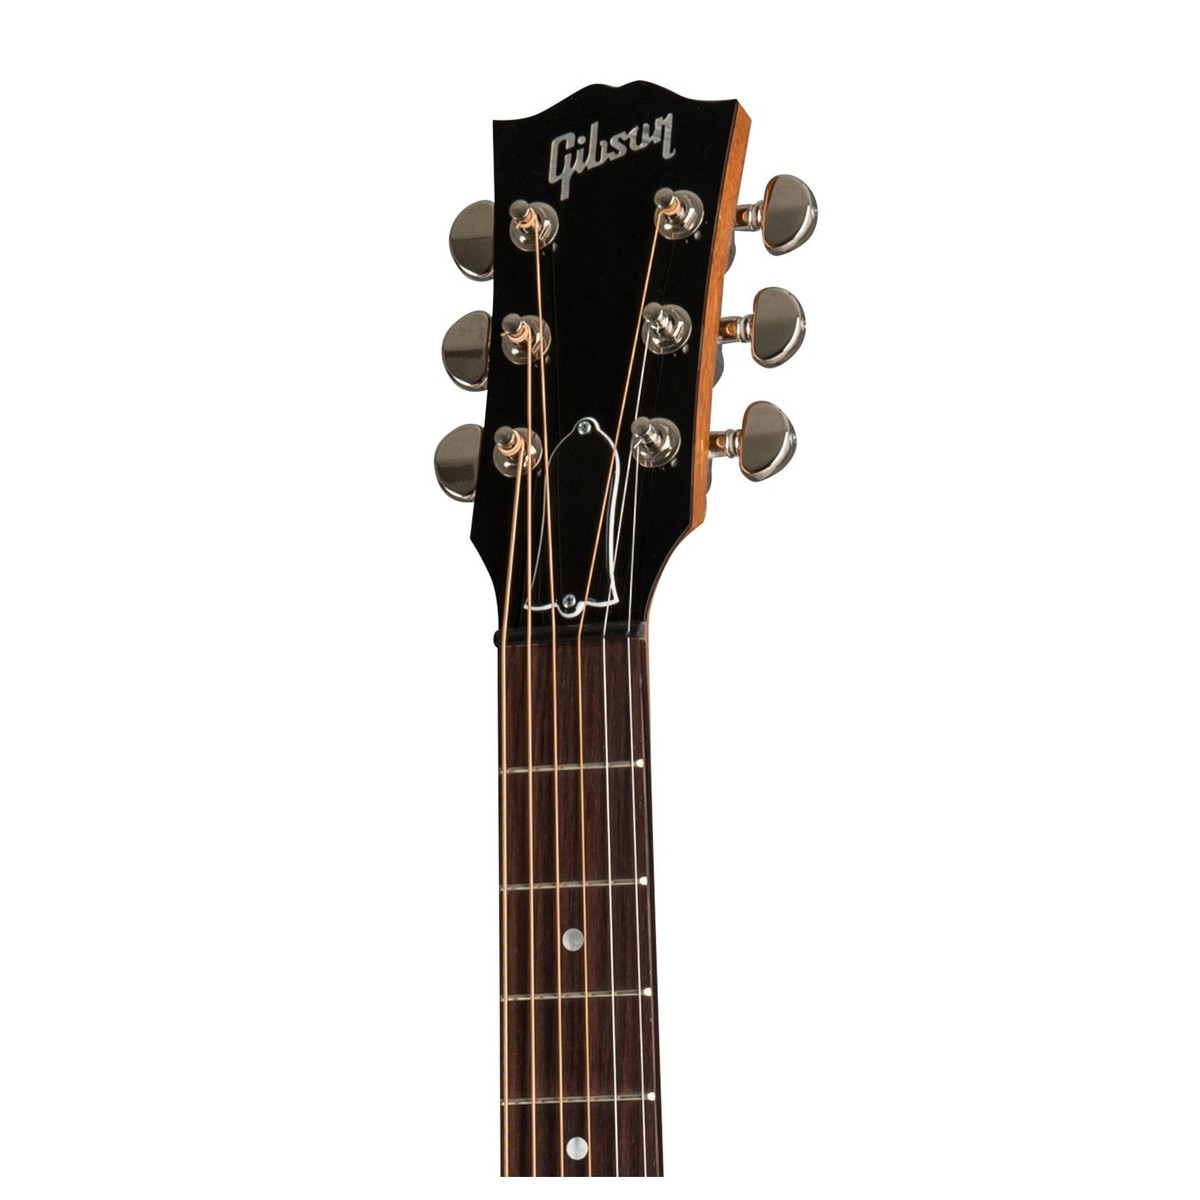 Gibson J-45 Cutaway 2019 Dreadnought Cw Epicea Acajou Rw - Heritage Cherry Sunburst - Elektroakustische Gitarre - Variation 4